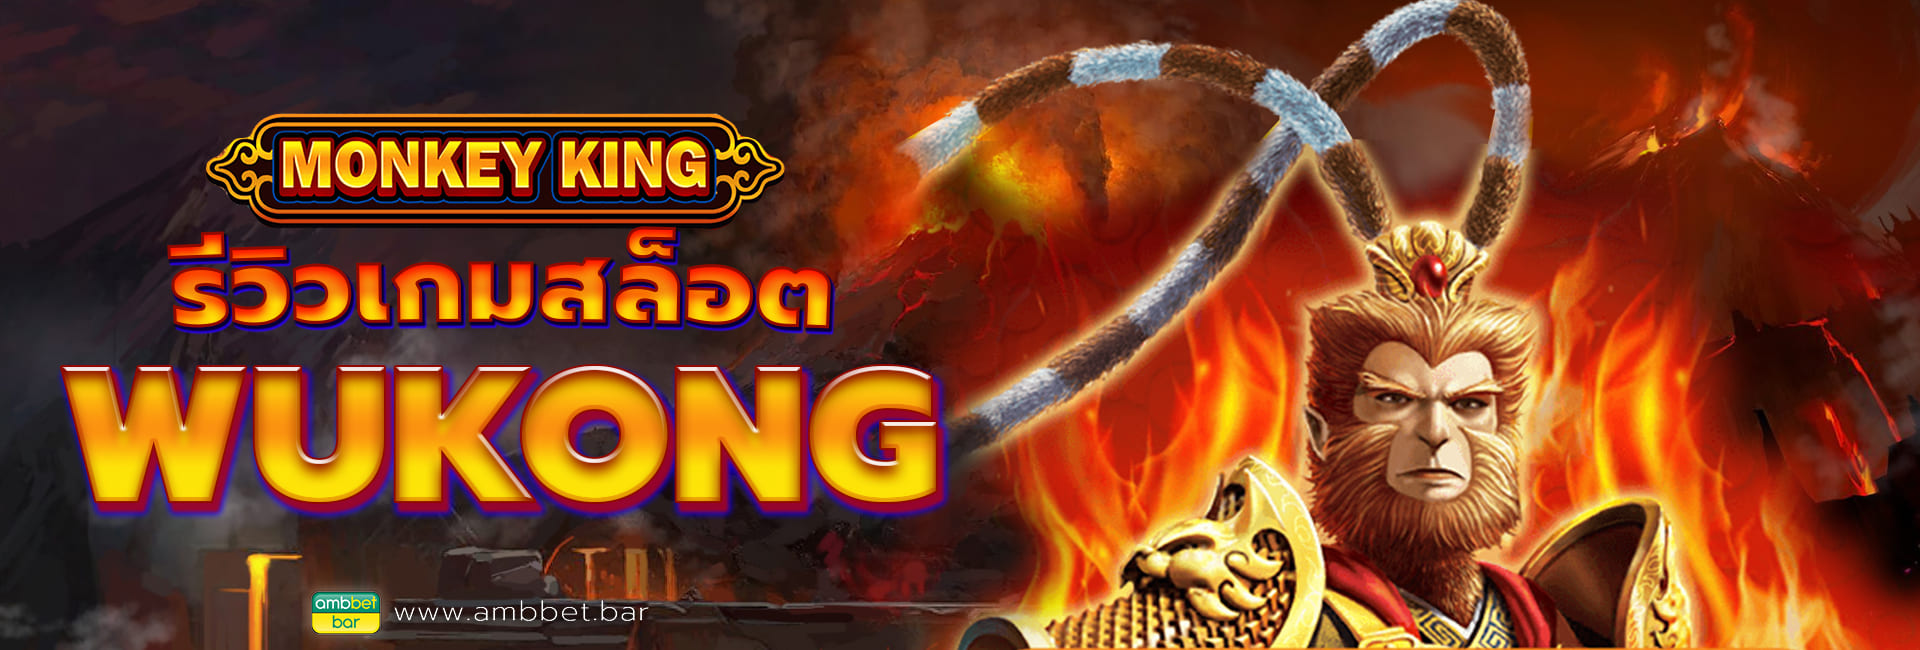 Wukong banner